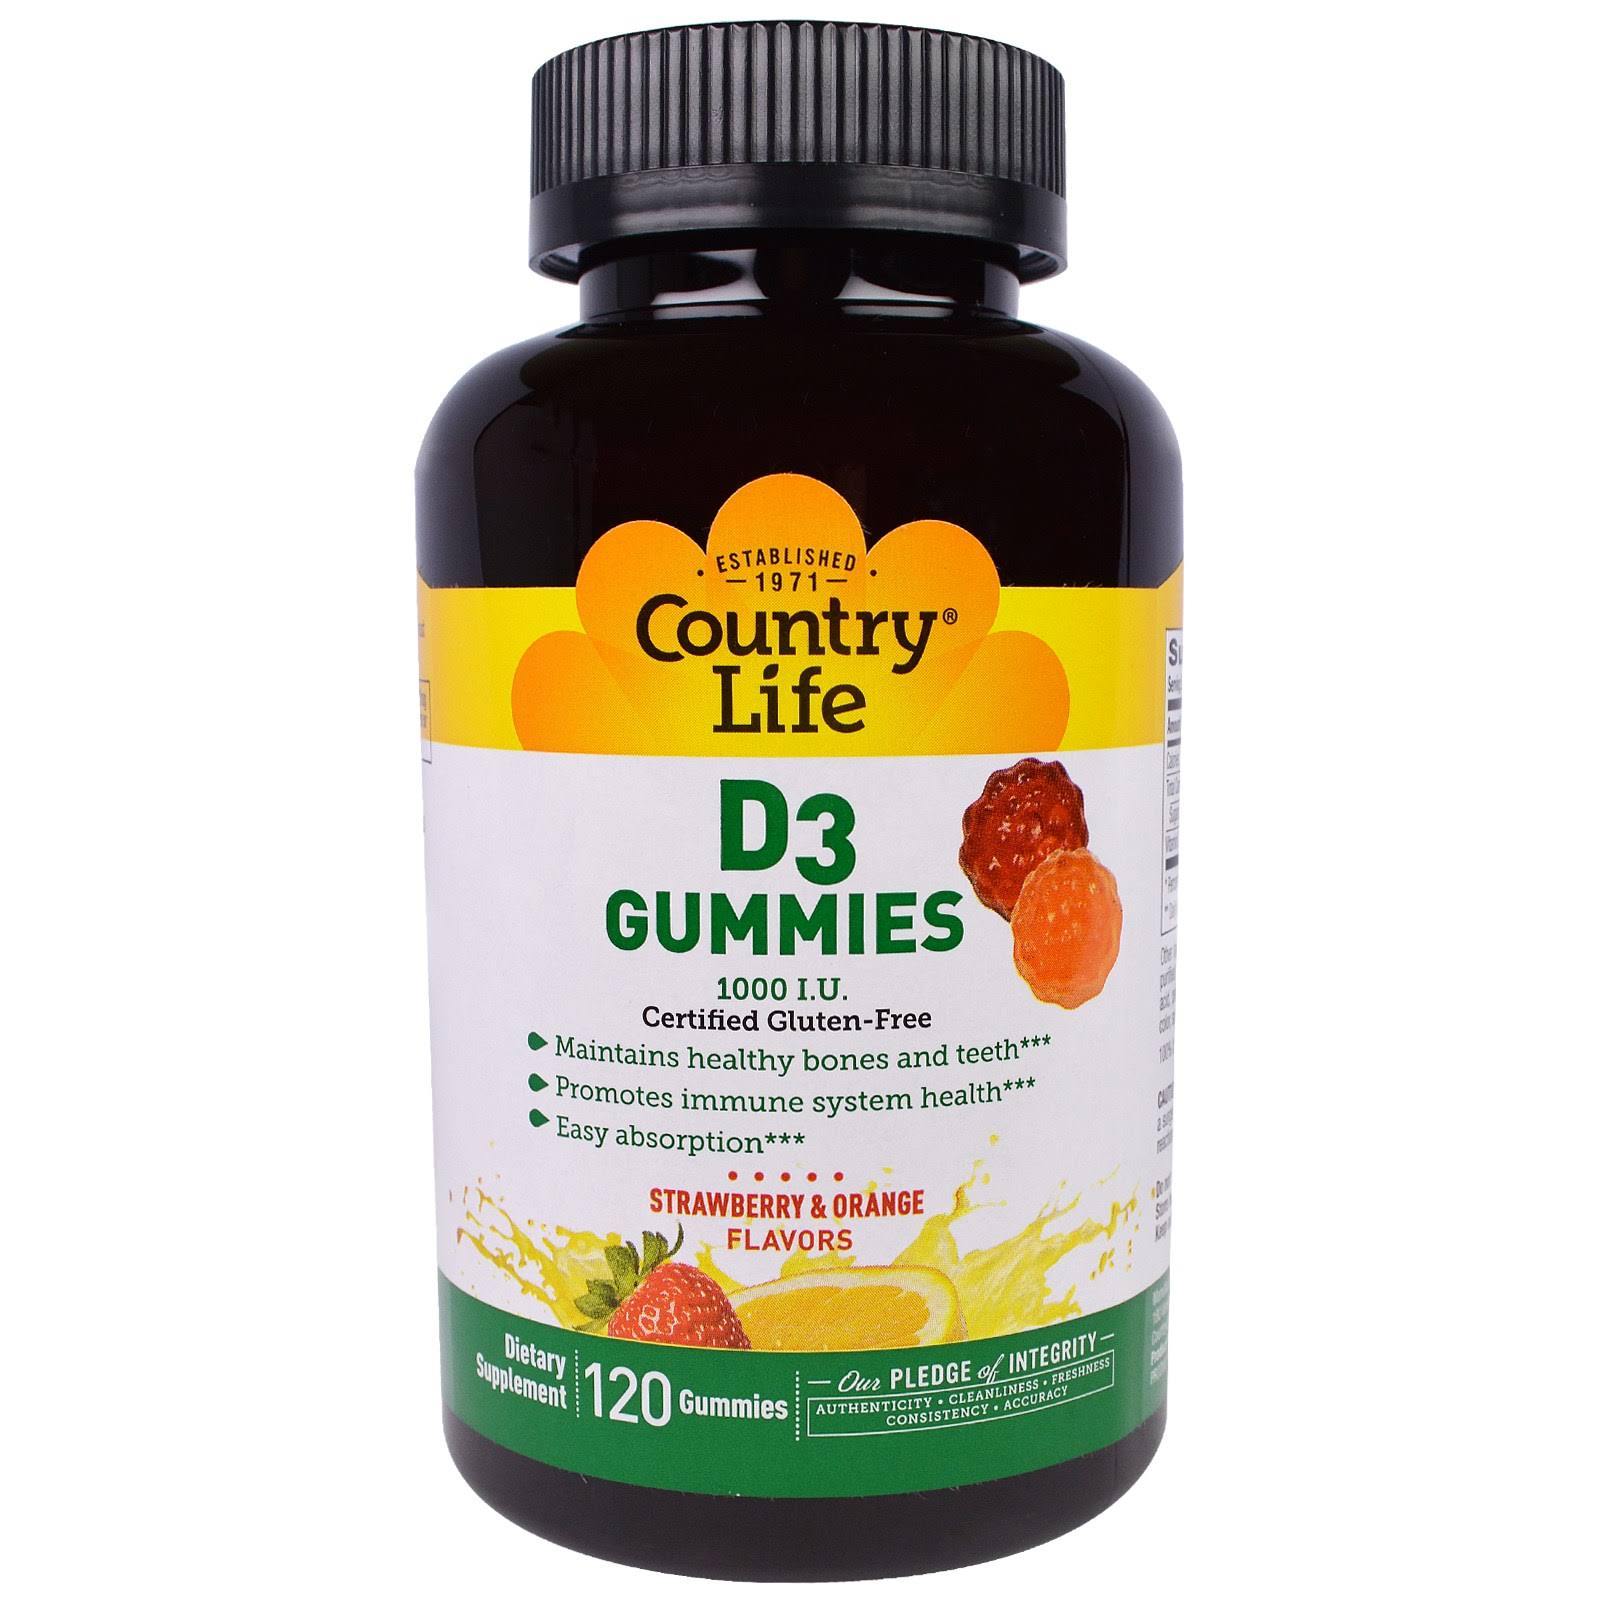 Country Life D3 Gummies - Strawberry & Orange, 1000 IU, 120 Gummies